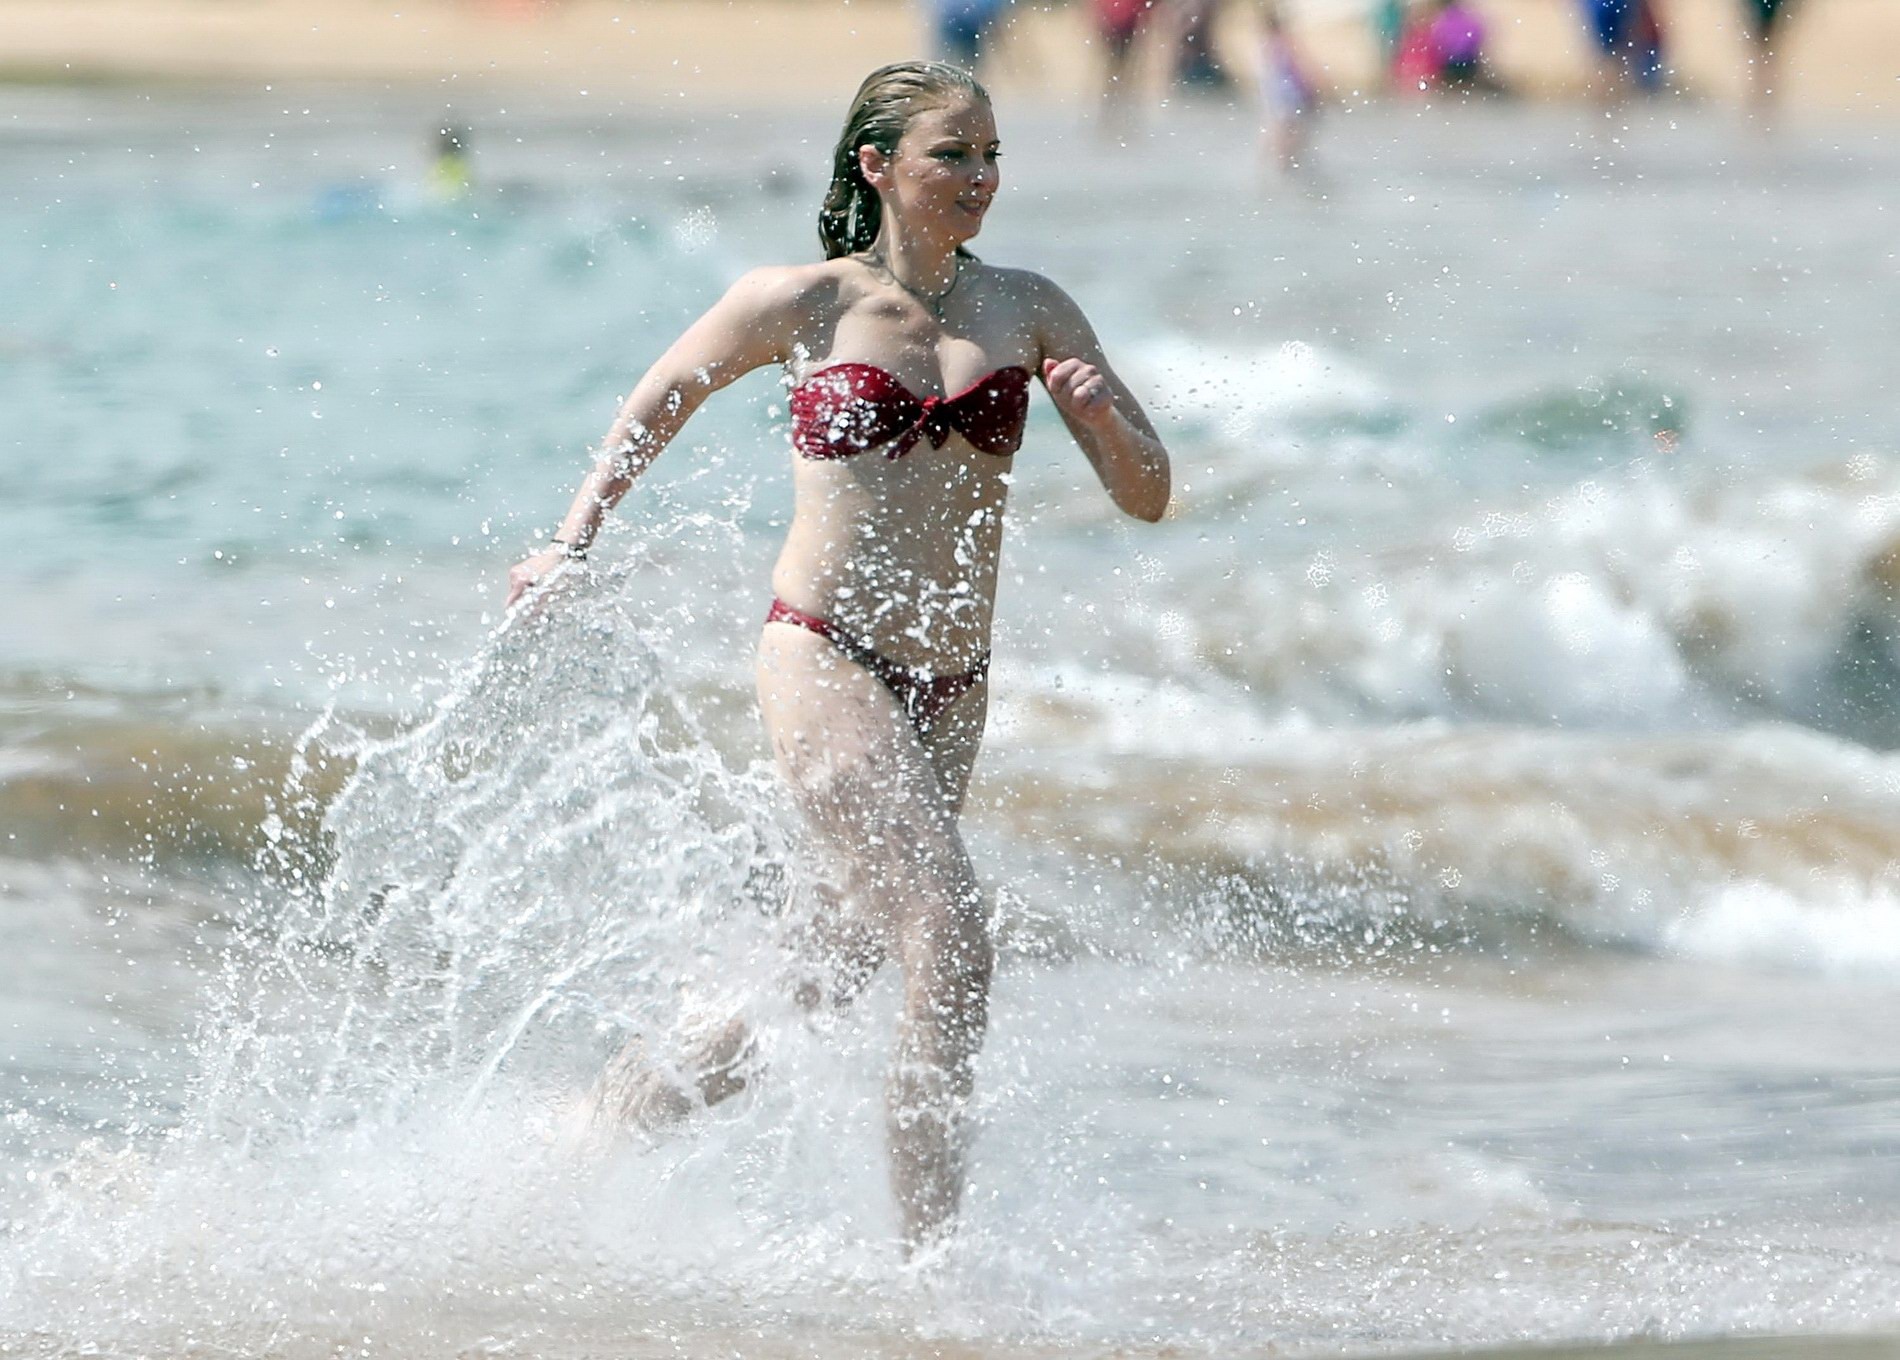 Elisabeth Harnois wearing a strapless red bikini at a beach #75162878